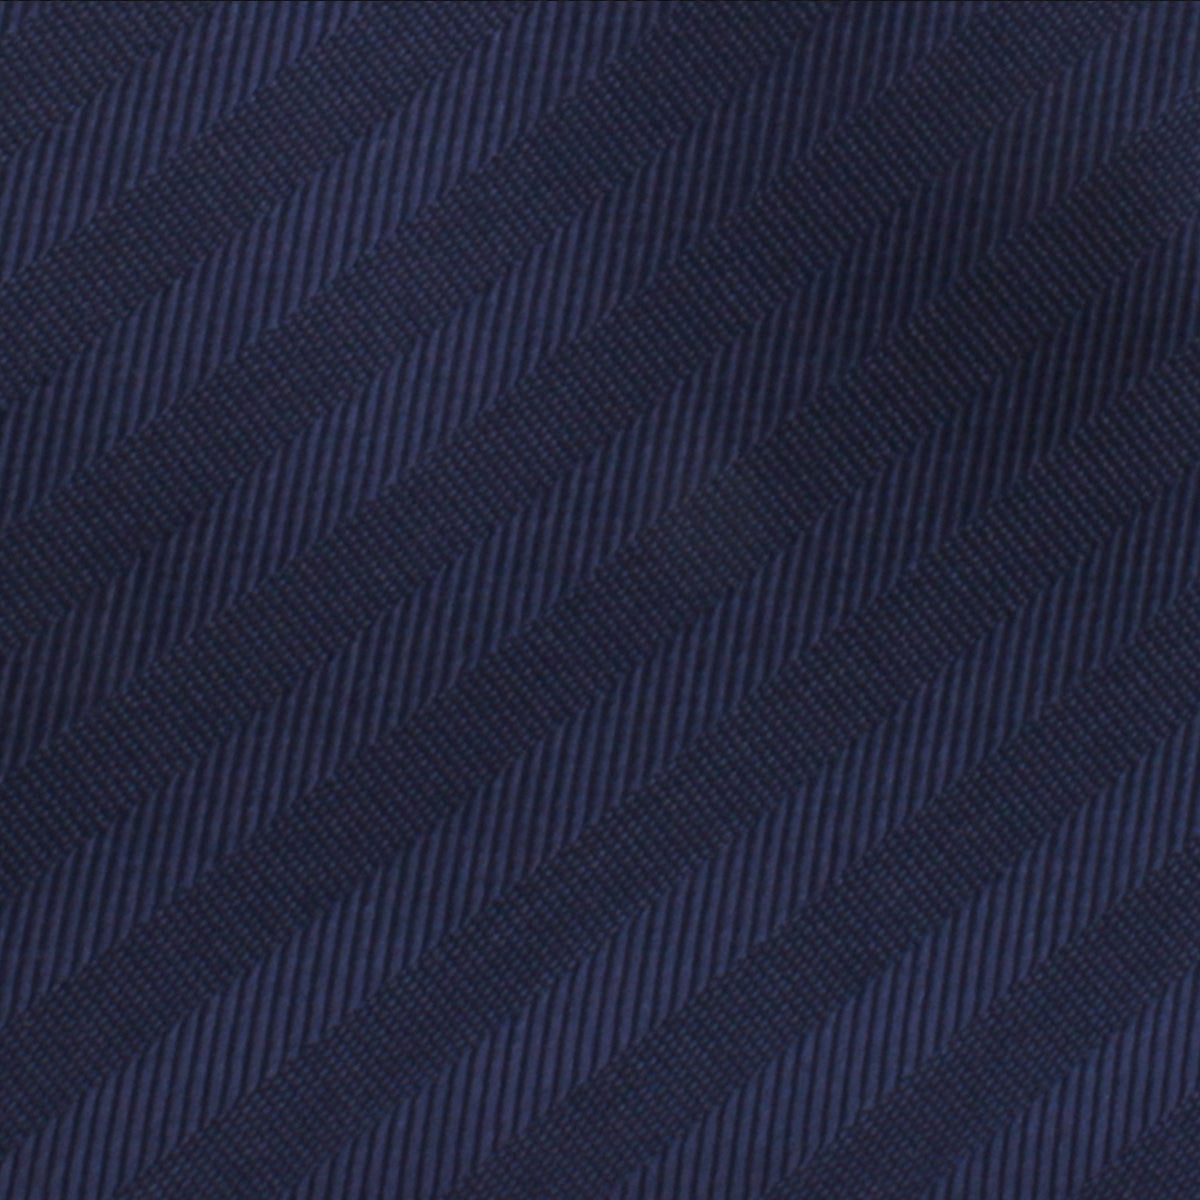 Venice Navy Blue Striped Fabric Swatch